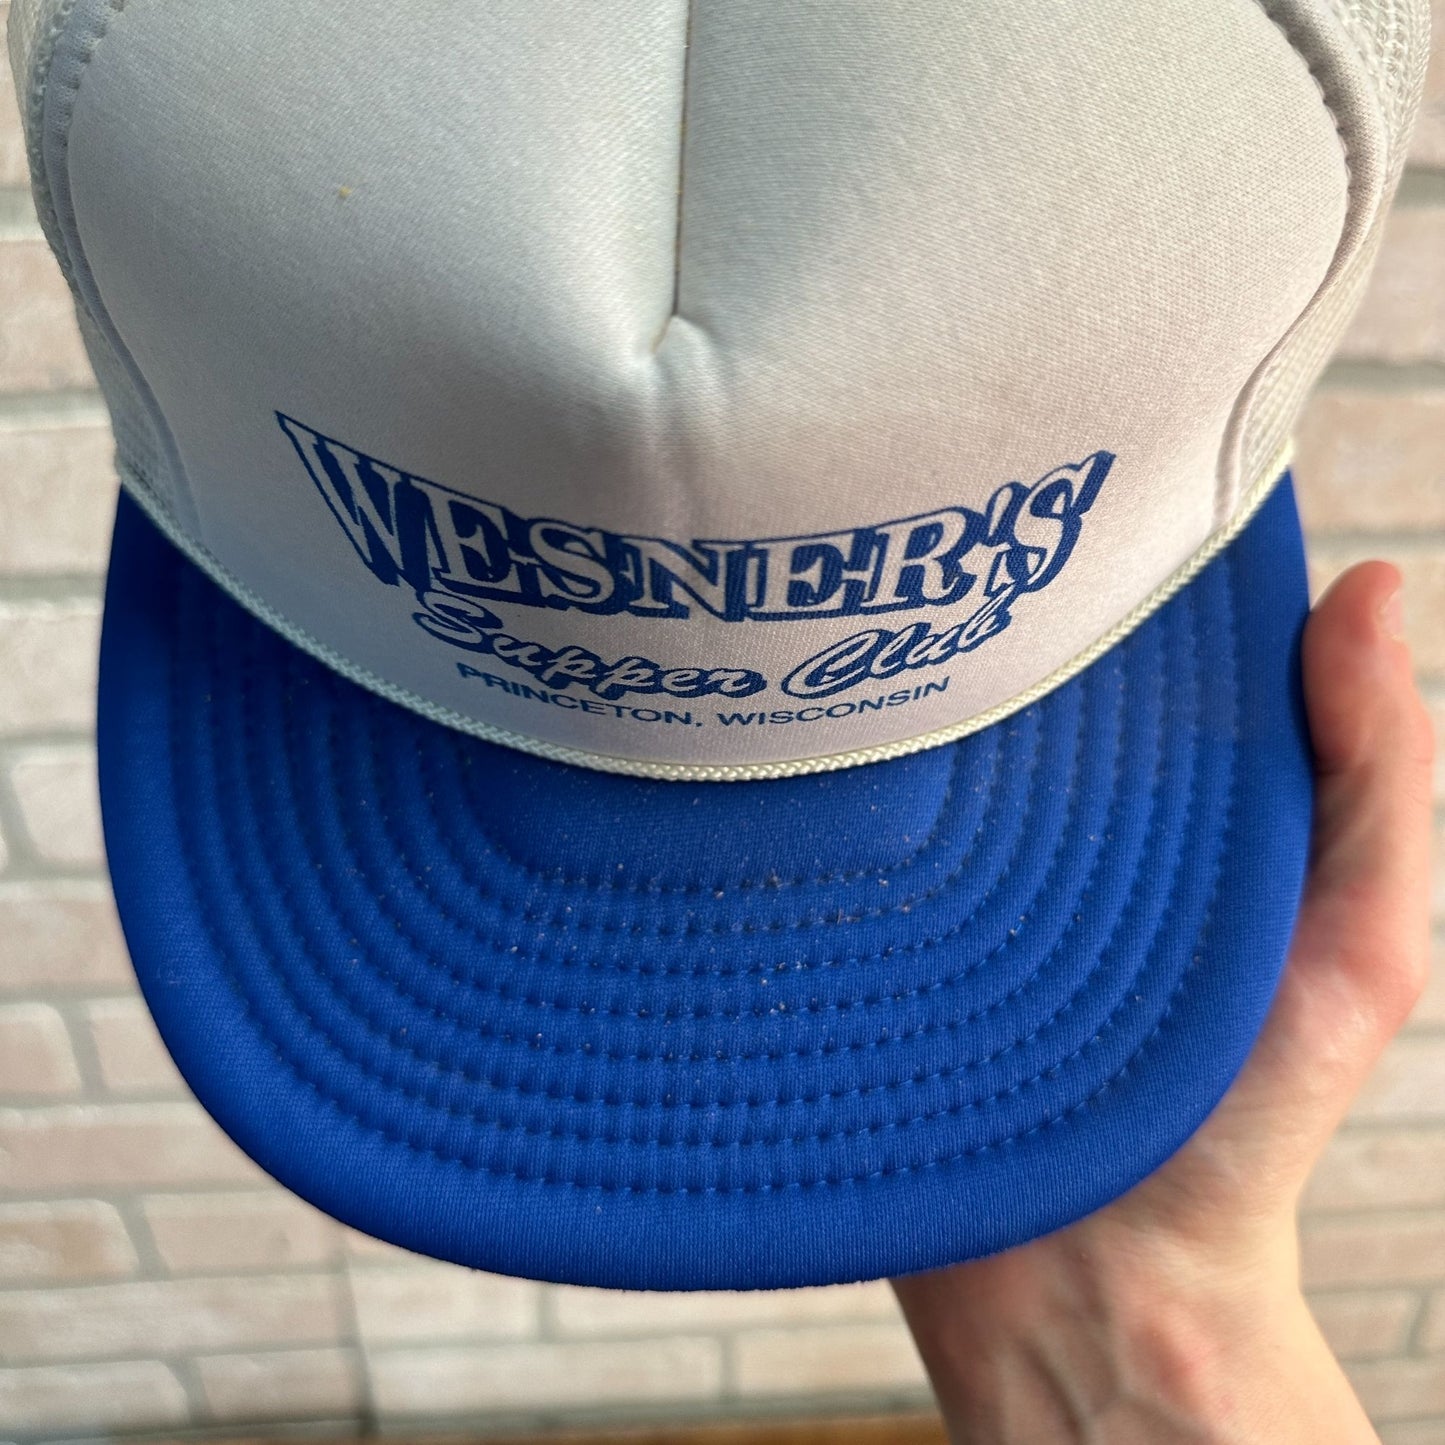 VINTAGE WESNER SUPPER CLUB PRINCETON WISCONSIN MESH RETRO SNAPBACK HAT